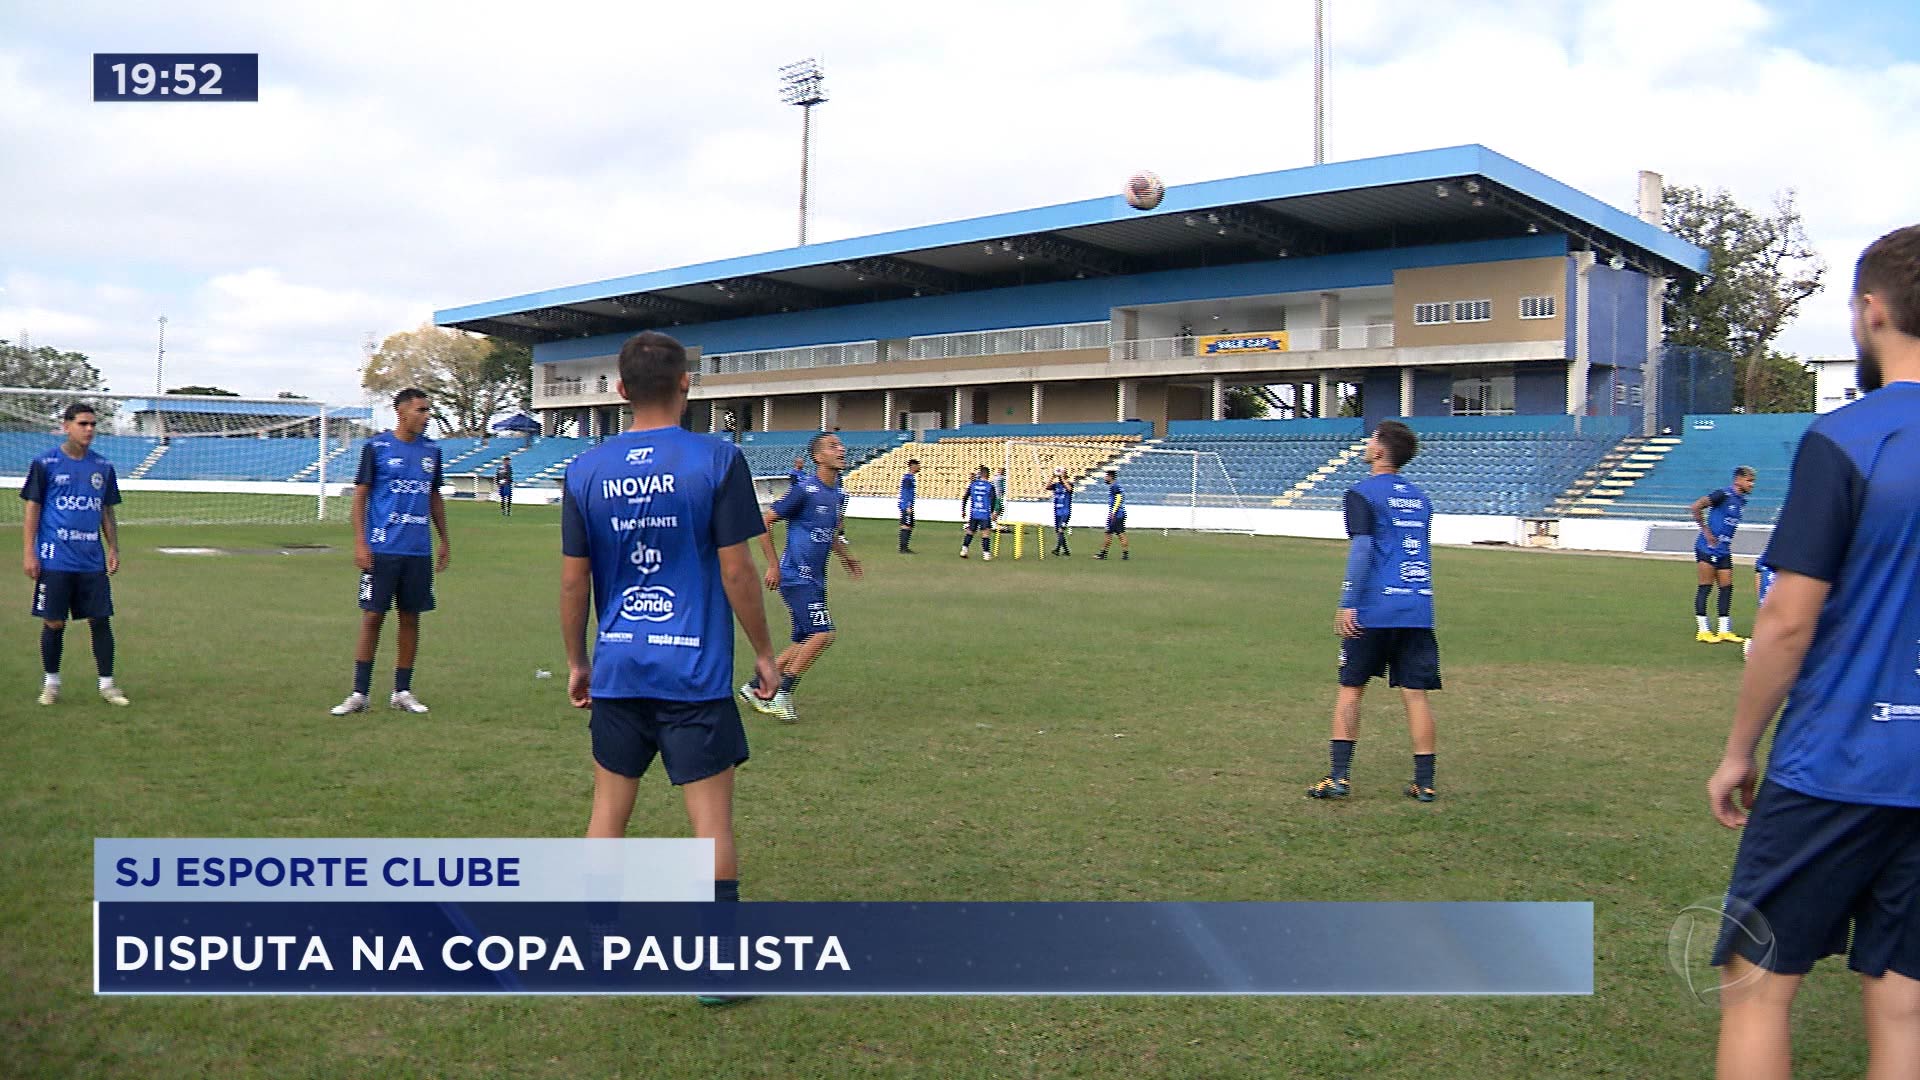 Vídeo: São José Esporte Clube disputa Copa Paulista